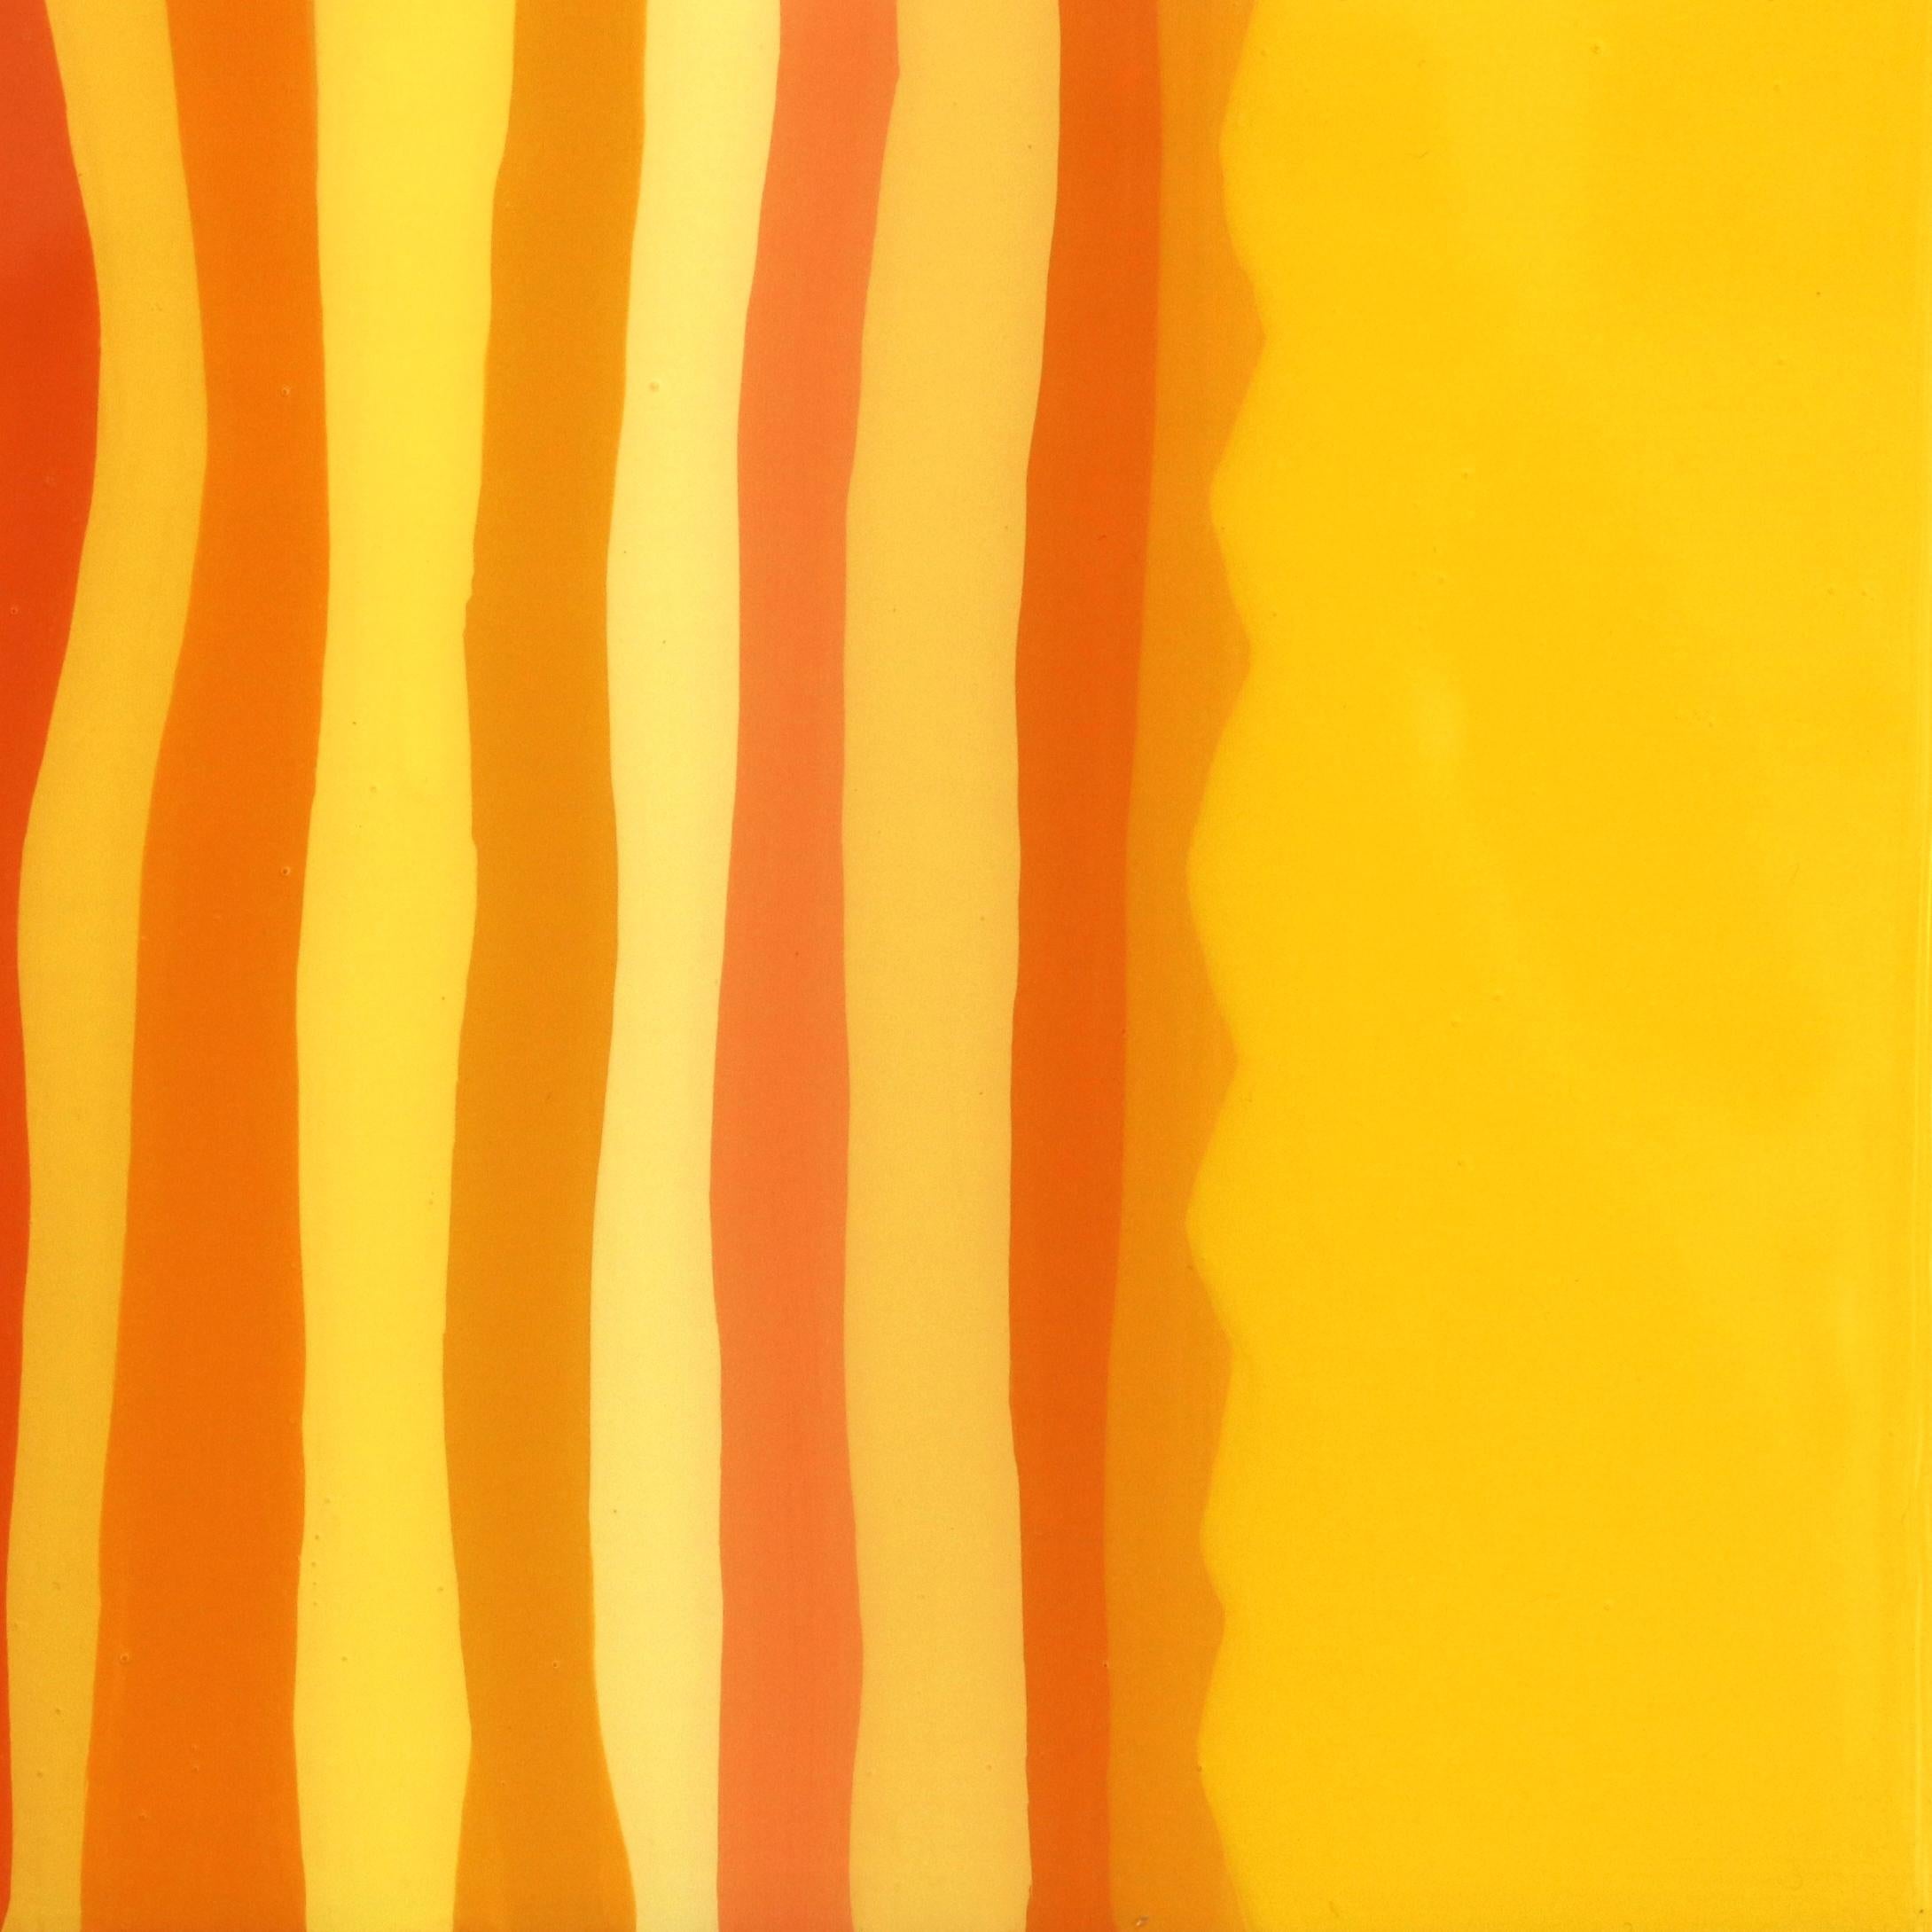 Lellow - Vibrant Yellow Orange Southwest Inspired Pop Art Cactus Painting For Sale 4